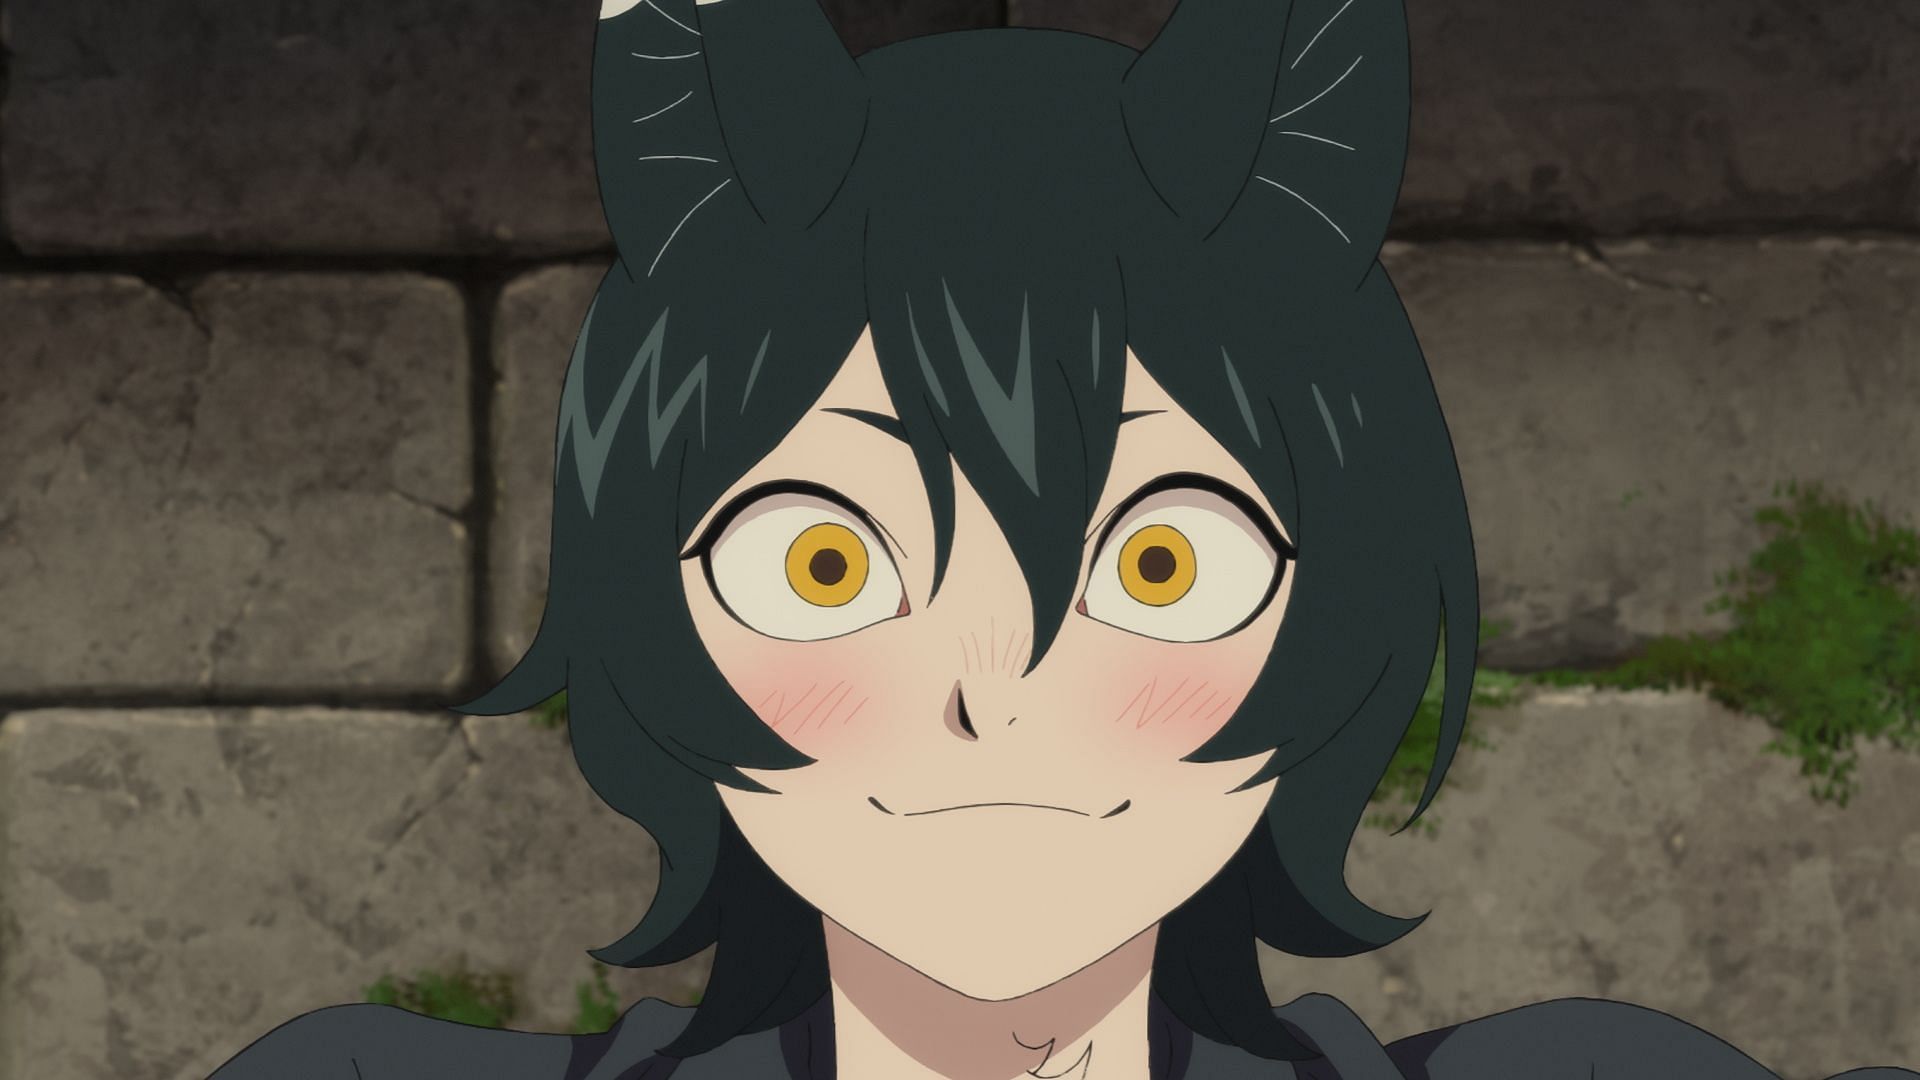 Asebi as shown in the anime (Image vai Studio Trigger)